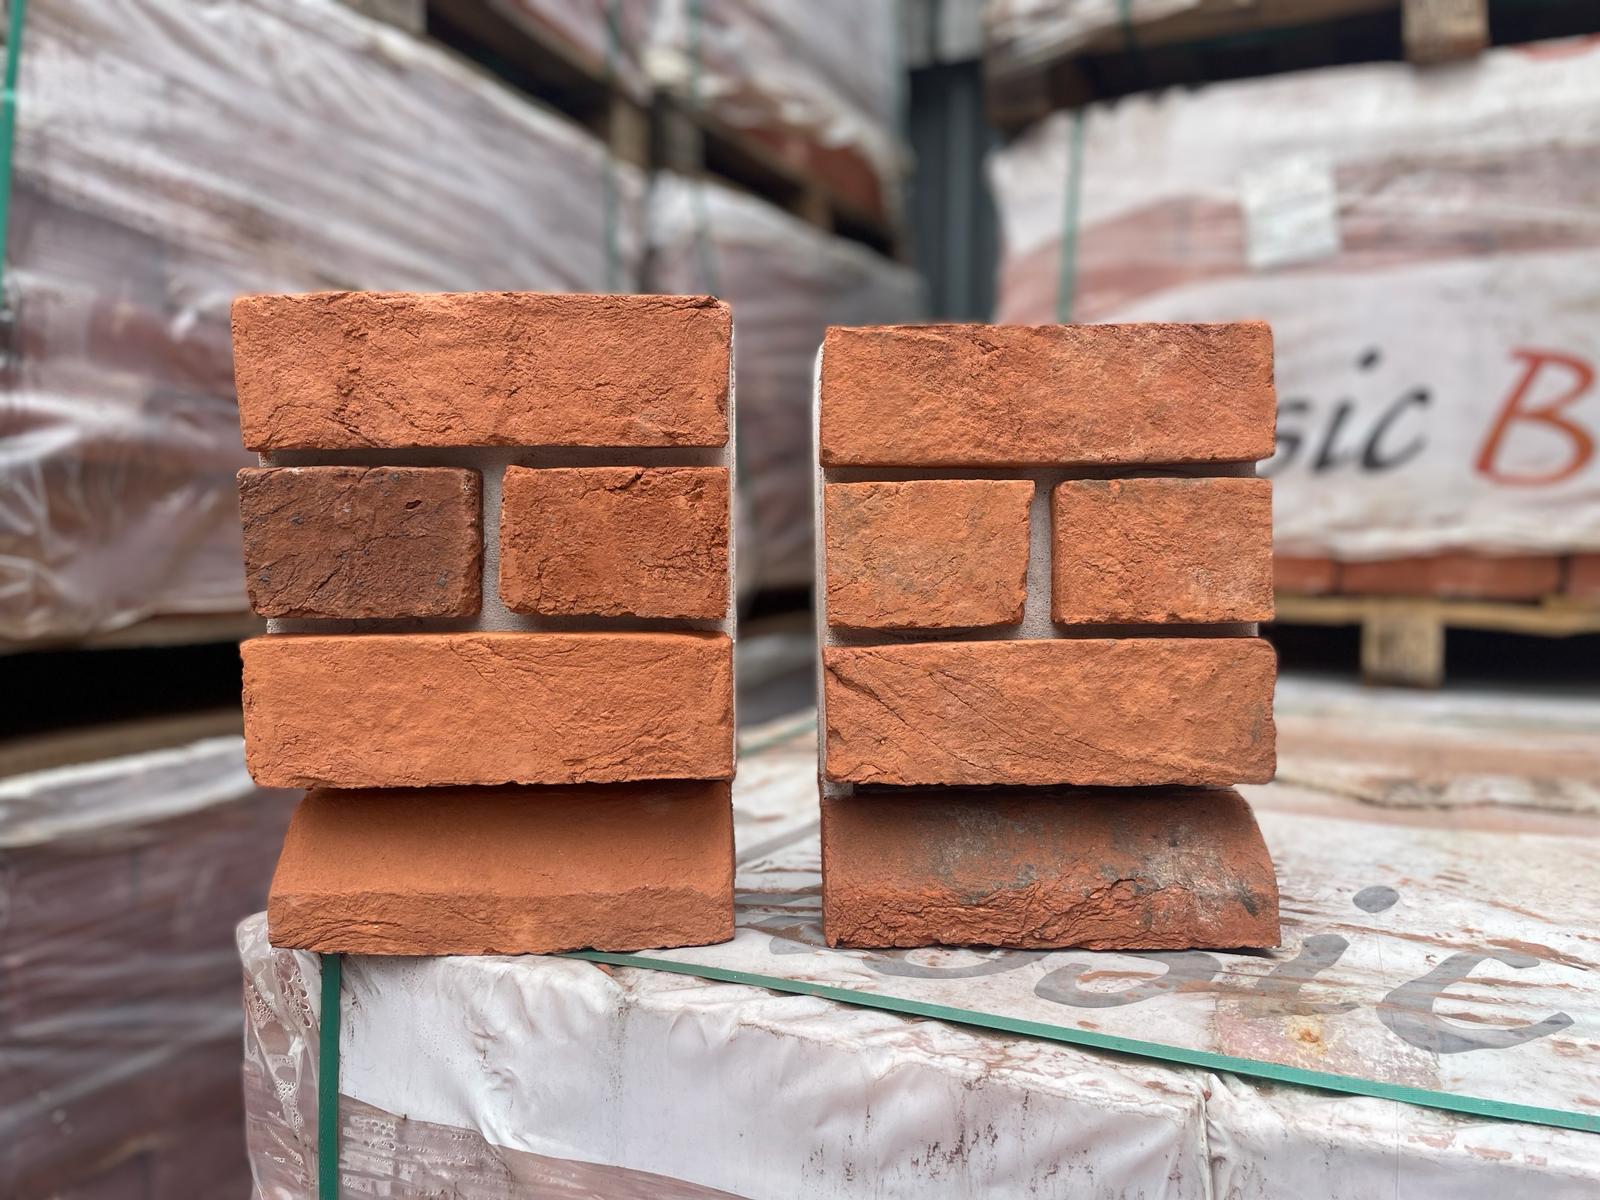 Classic Brick launches bat-friendly brick boxes